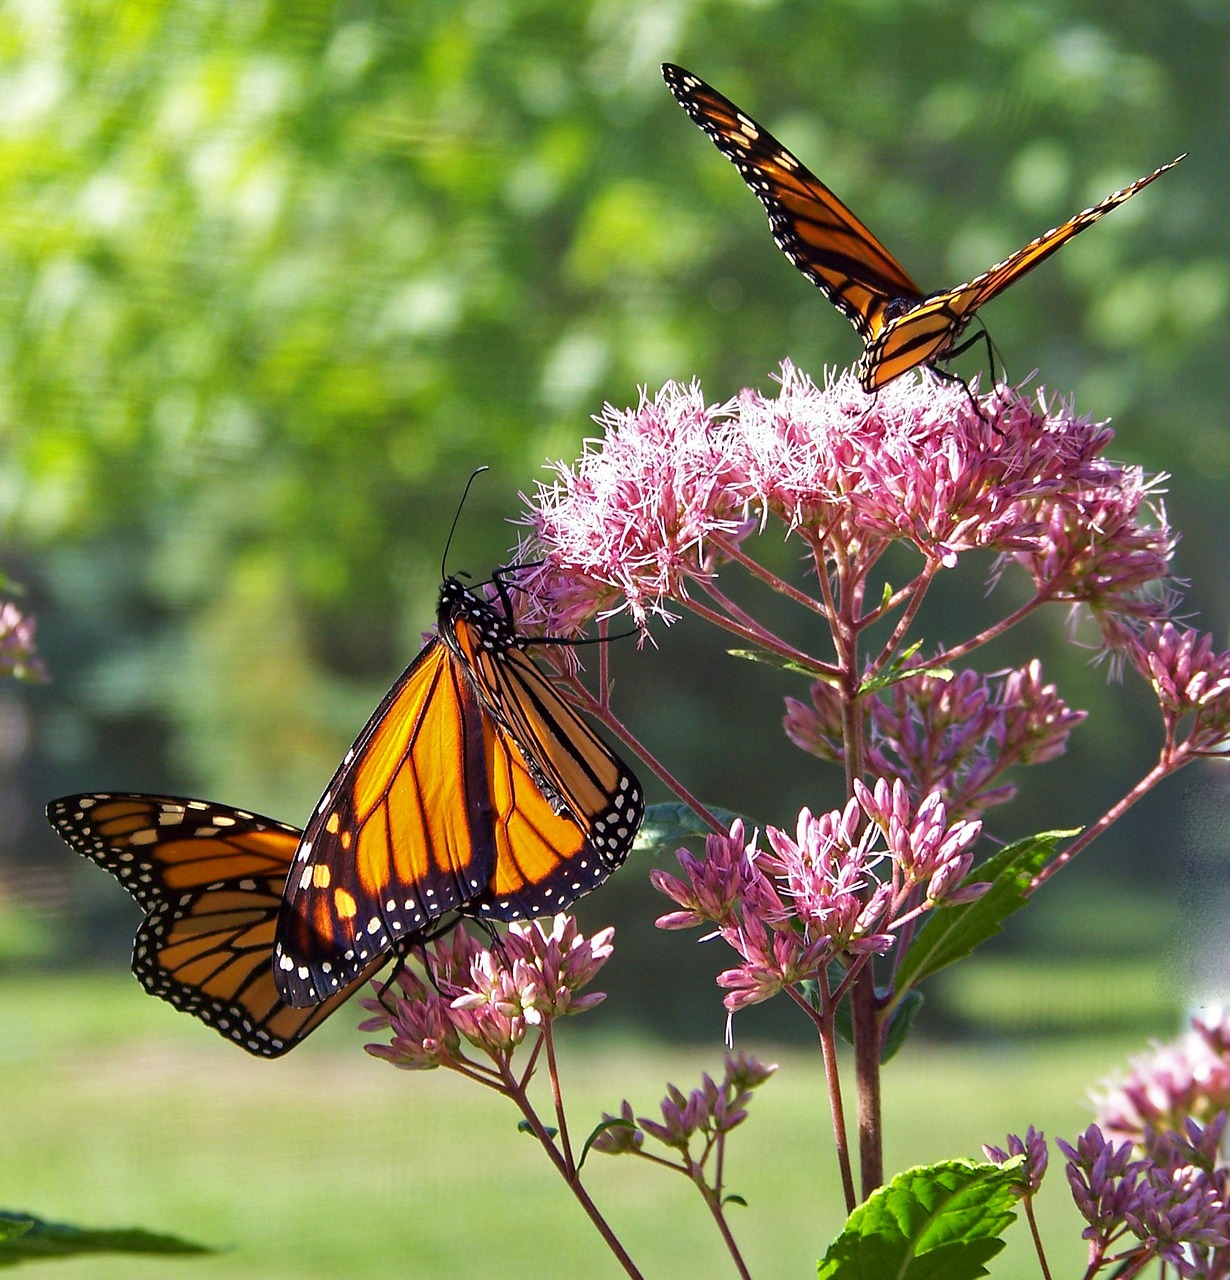 Gardens Designed to attract Butterflies Seminar